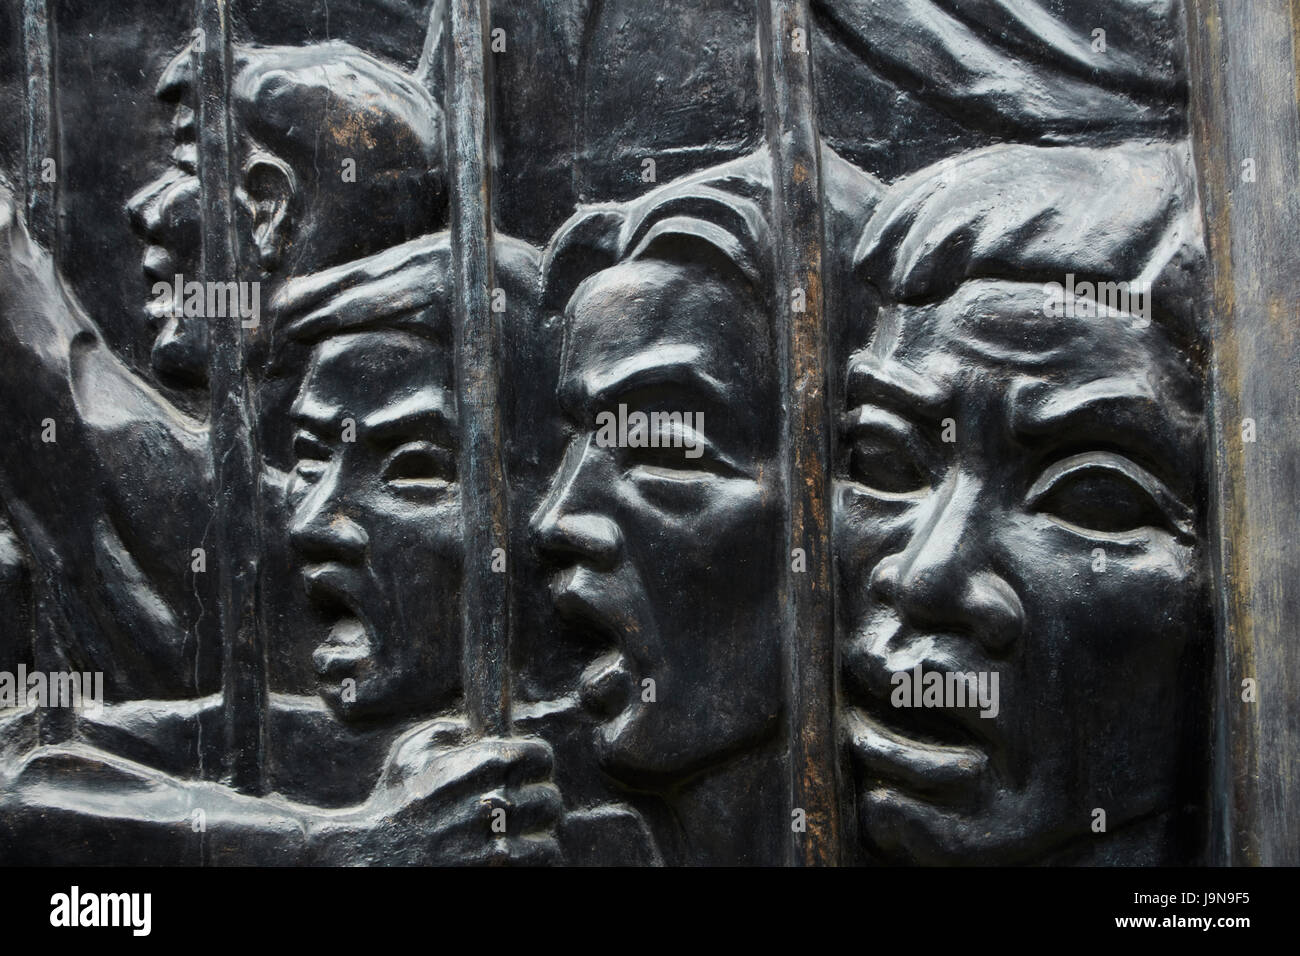 Bajorrelieve de prisioneros tras las rejas, la cárcel de Hoa Lo Museum, (aka Hanoi Hilton), Hanoi, Vietnam Foto de stock